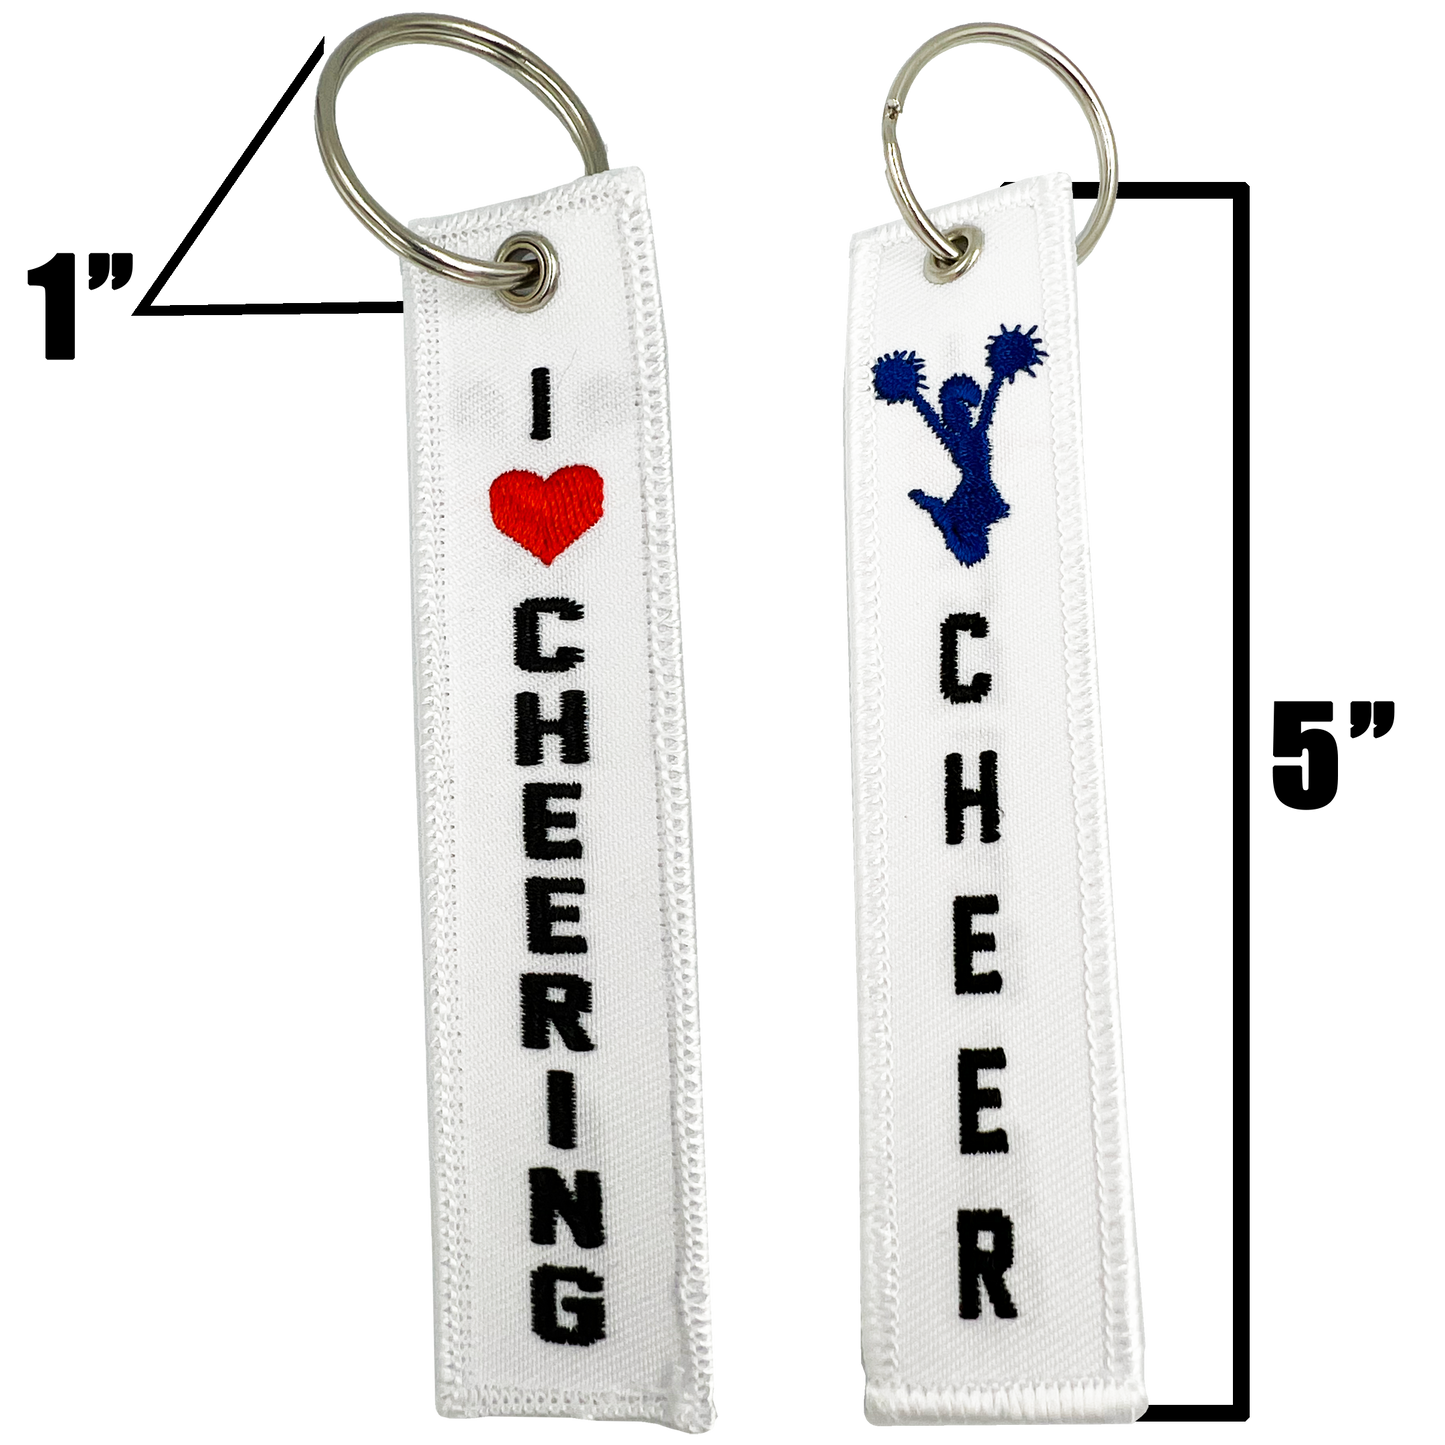 Discontinued GL8-008 Cheerleading Cheer Cheerleader Keychain or Luggage Tag or zipper pull School Spirit